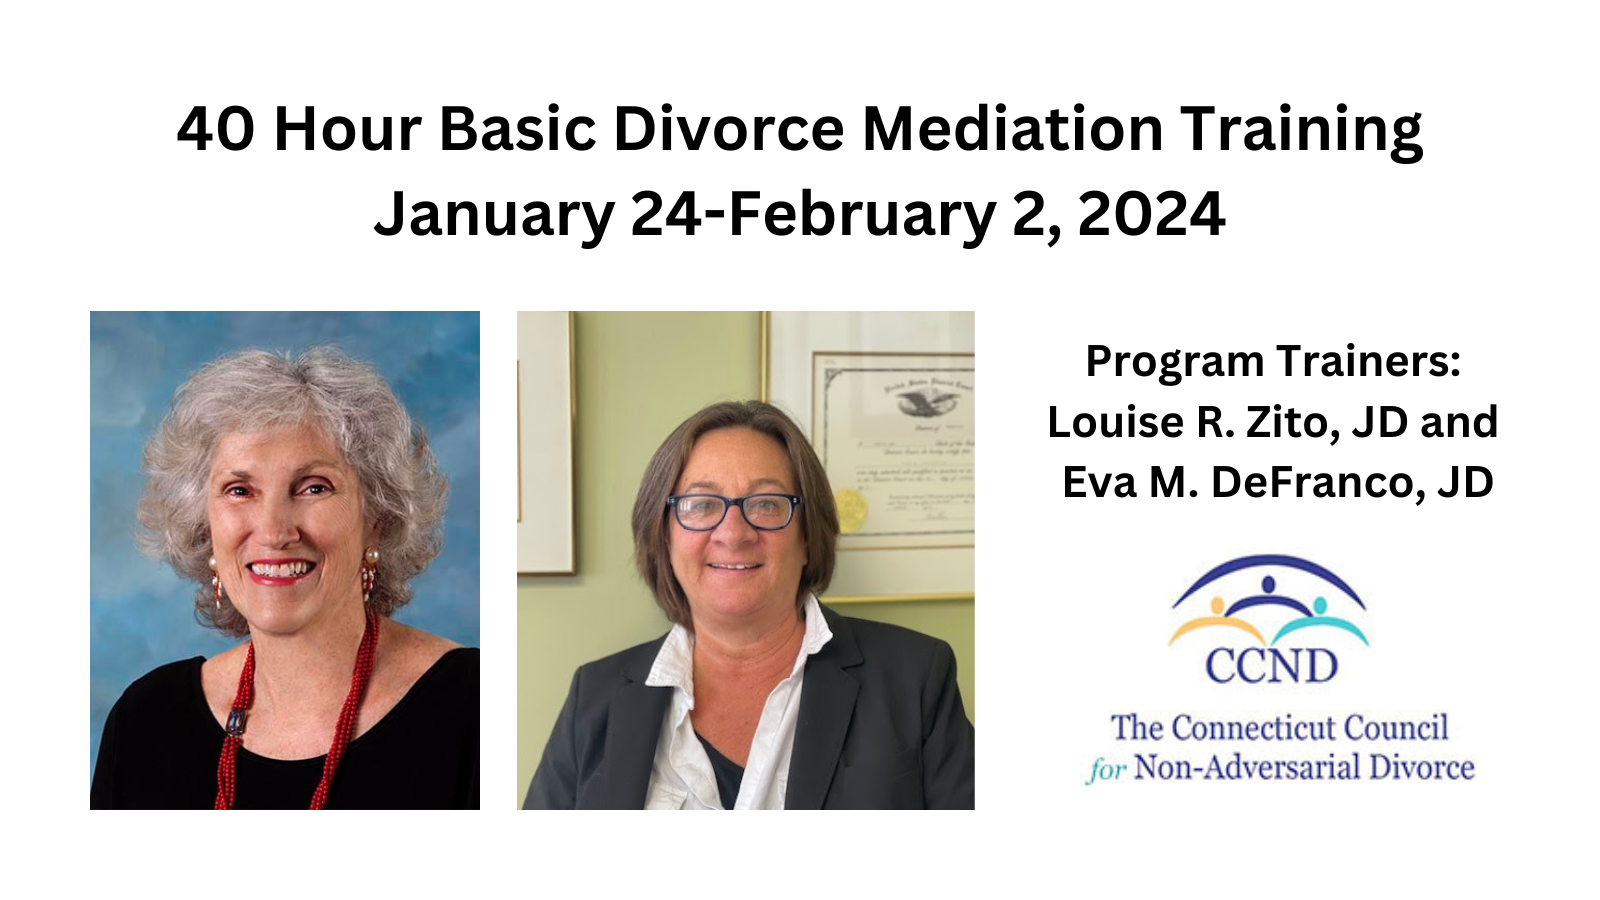 40 Hour Basic Divorce Mediation Training January 24-February 2, 2024